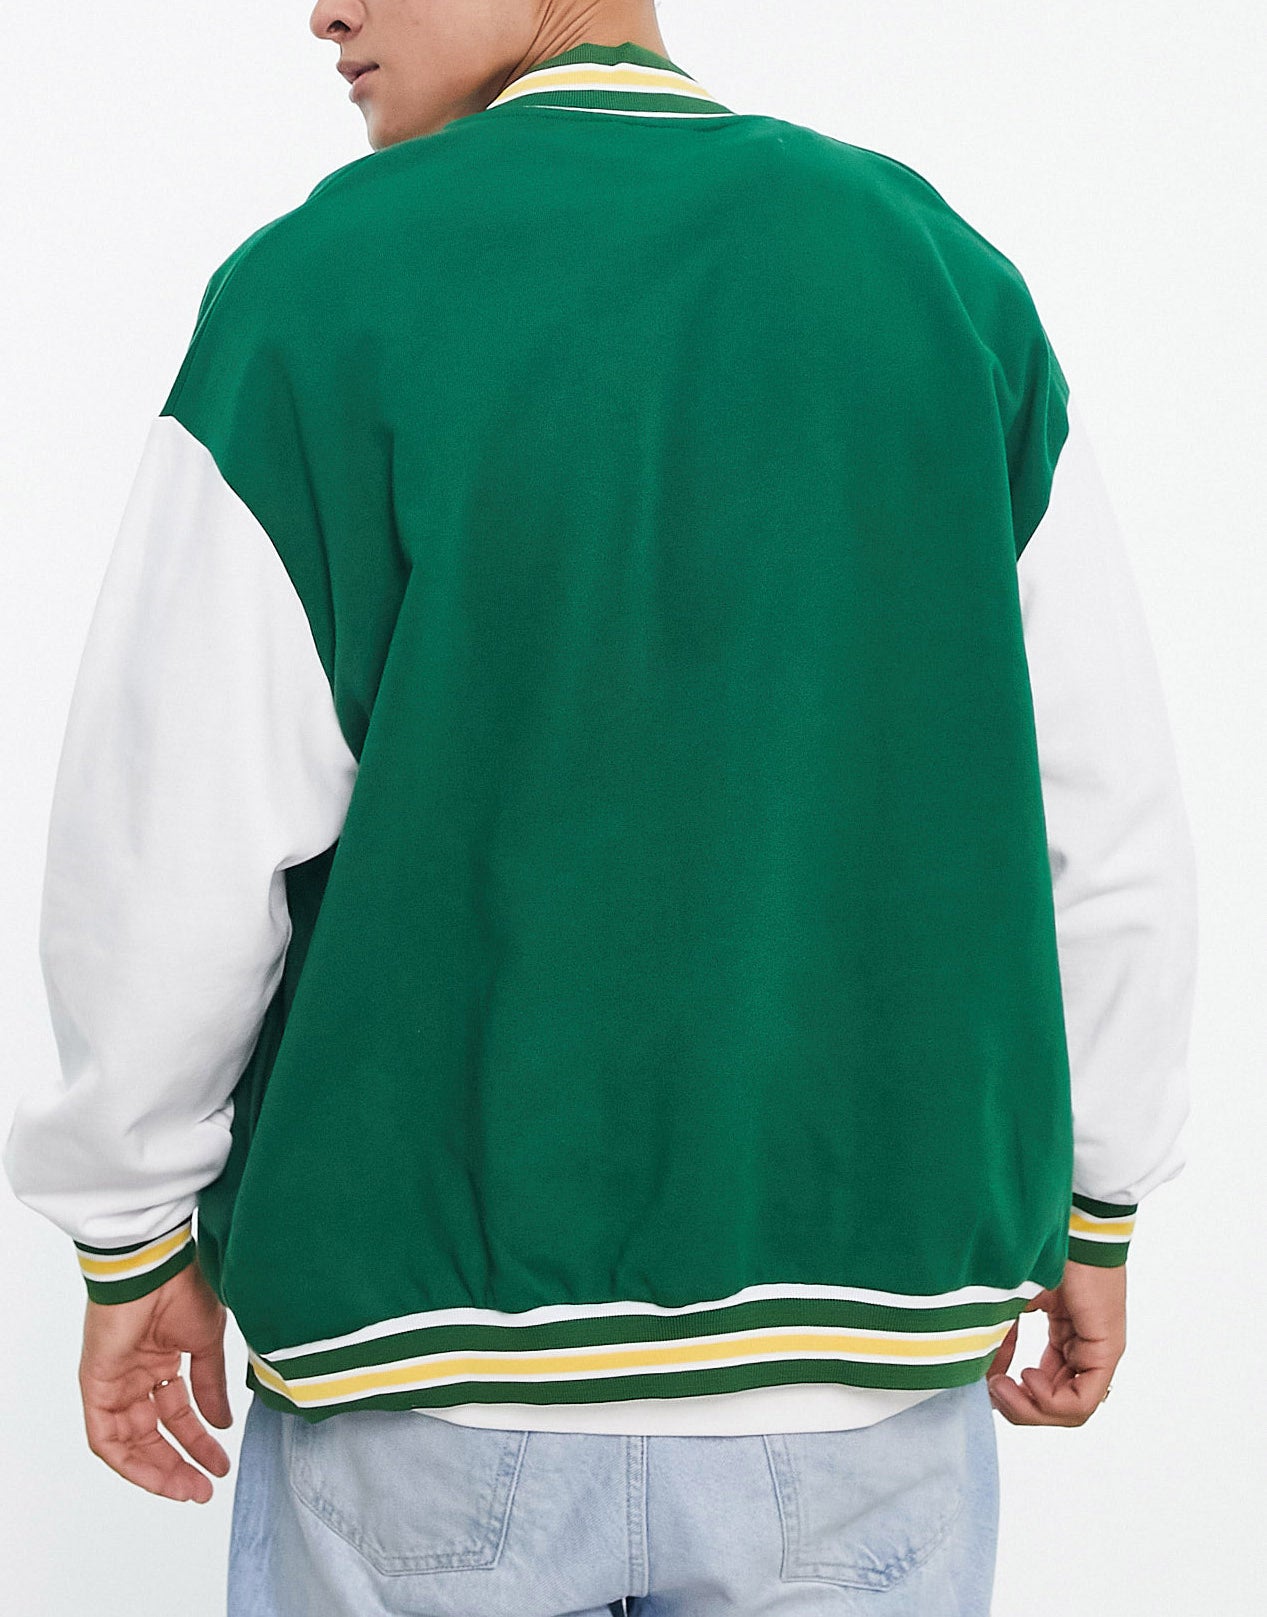 ASOS DESIGN oversized varsity bomber jacket in green and ecru cotton